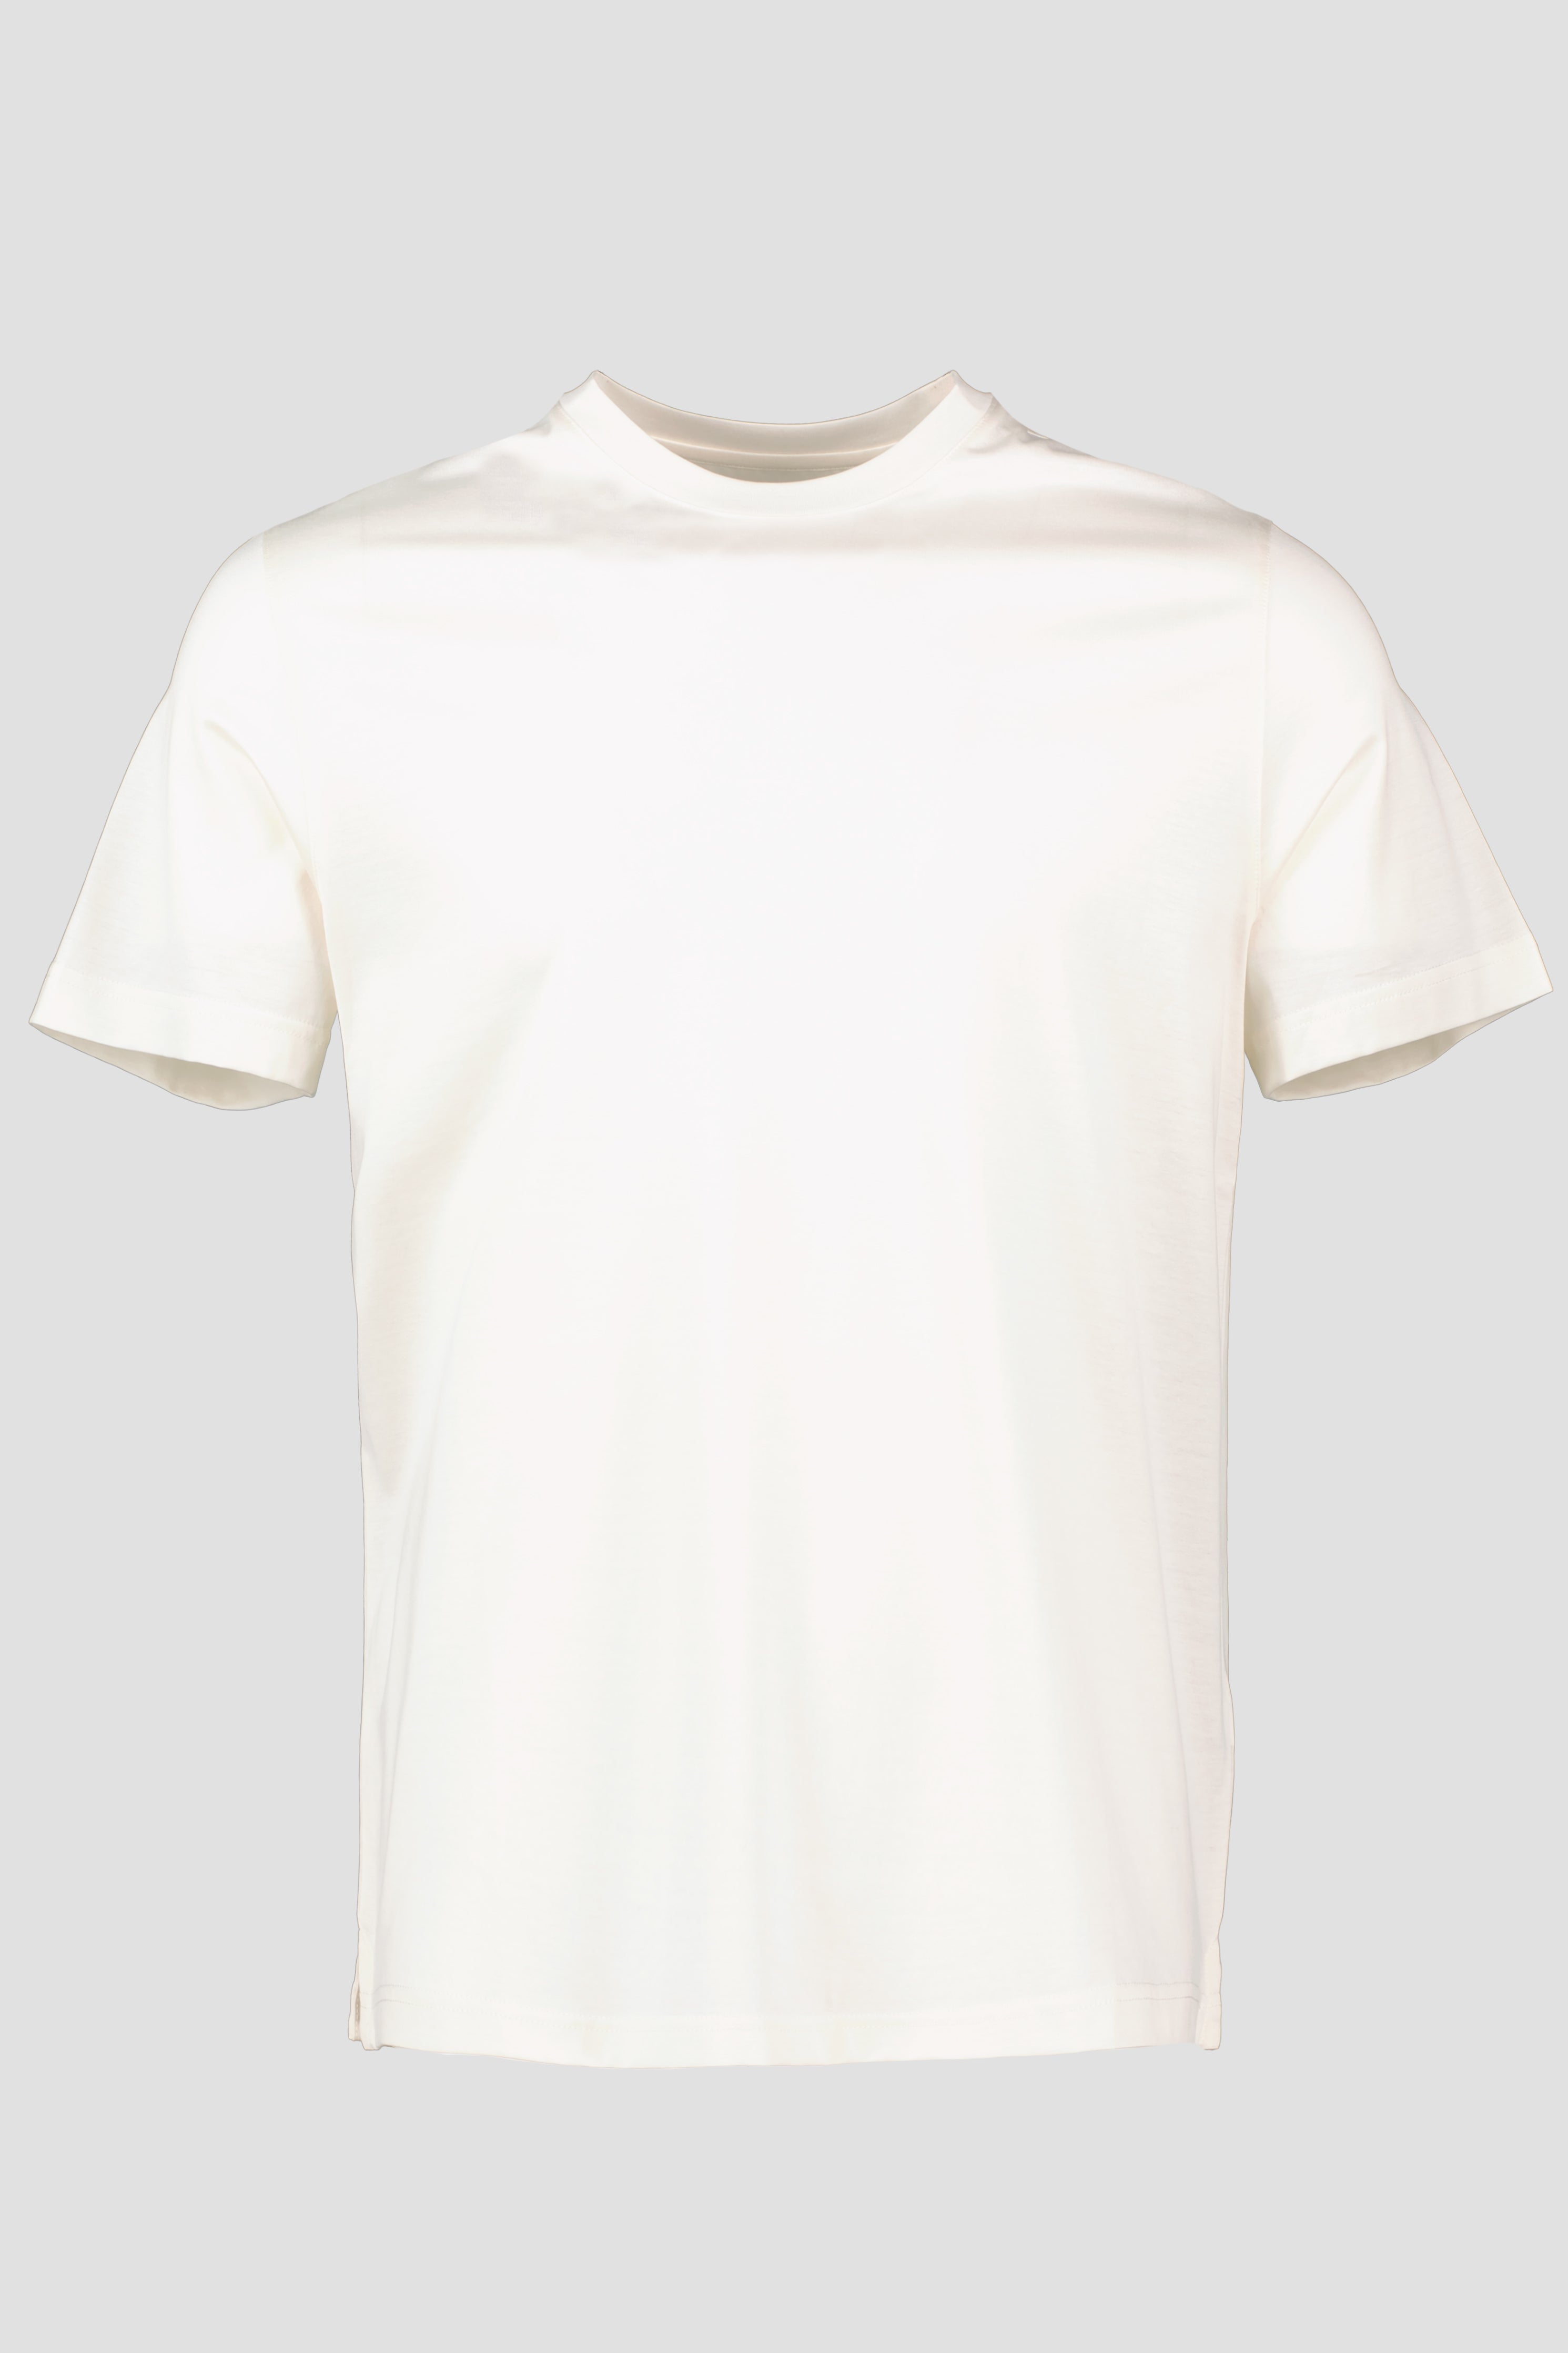 Men's Pal Zileri White Mercerised T Shirt